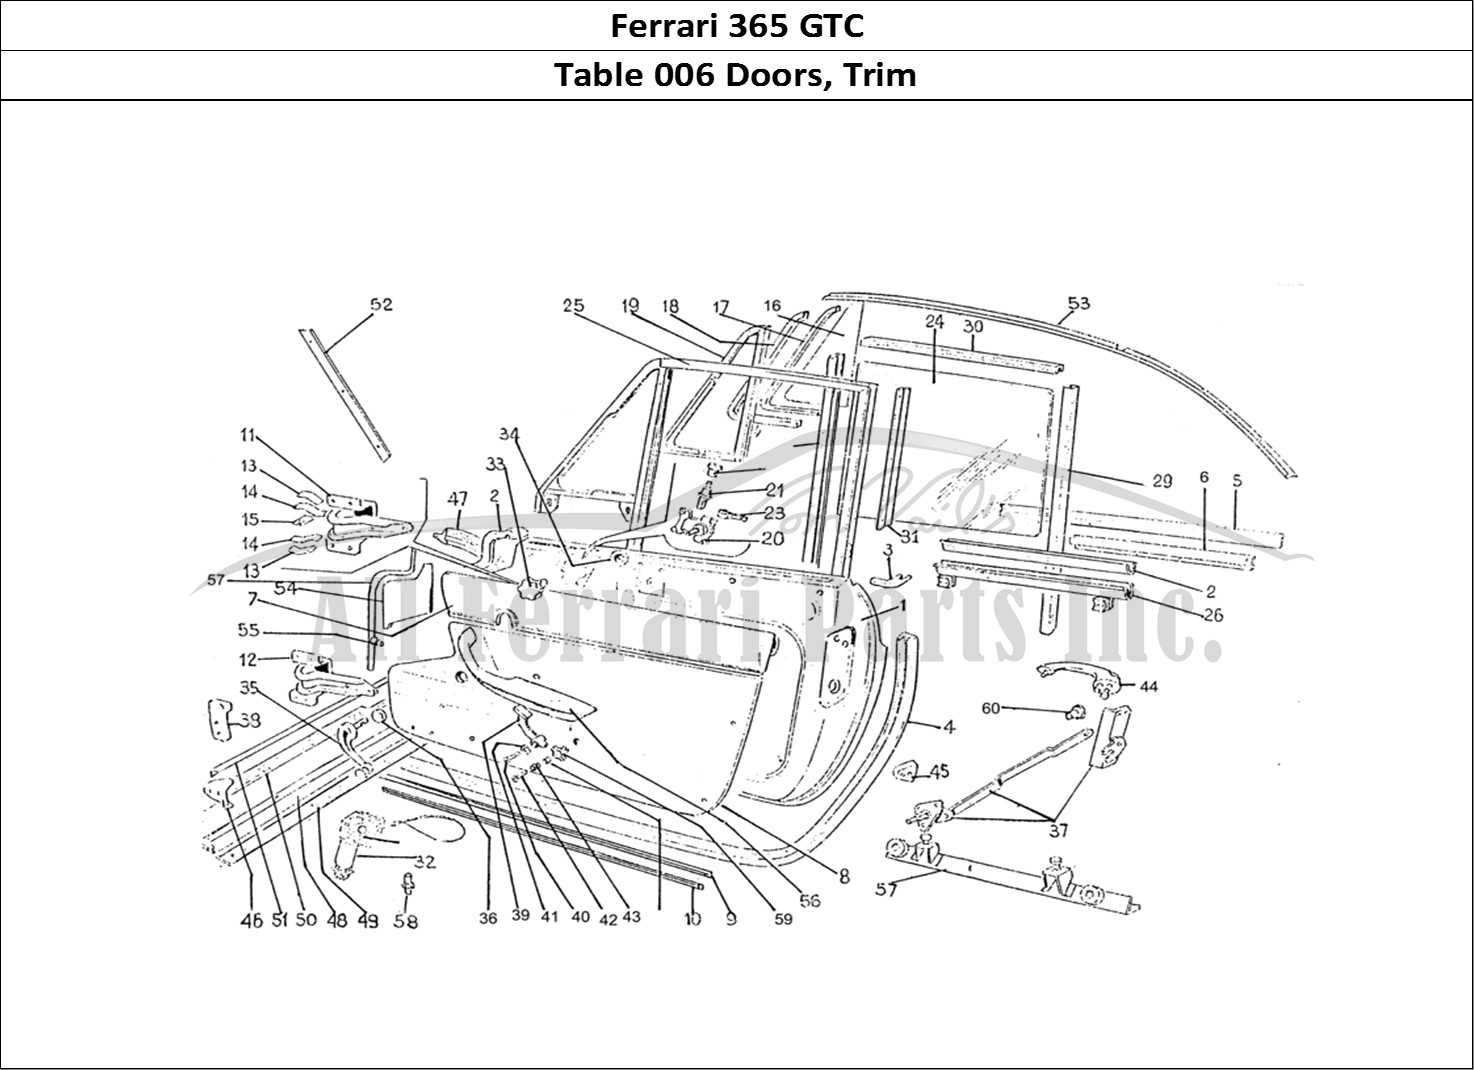 Ferrari Parts Ferrari 330 GTC (Coachwork) Page 006 Doors & Trim (Edizione 1,